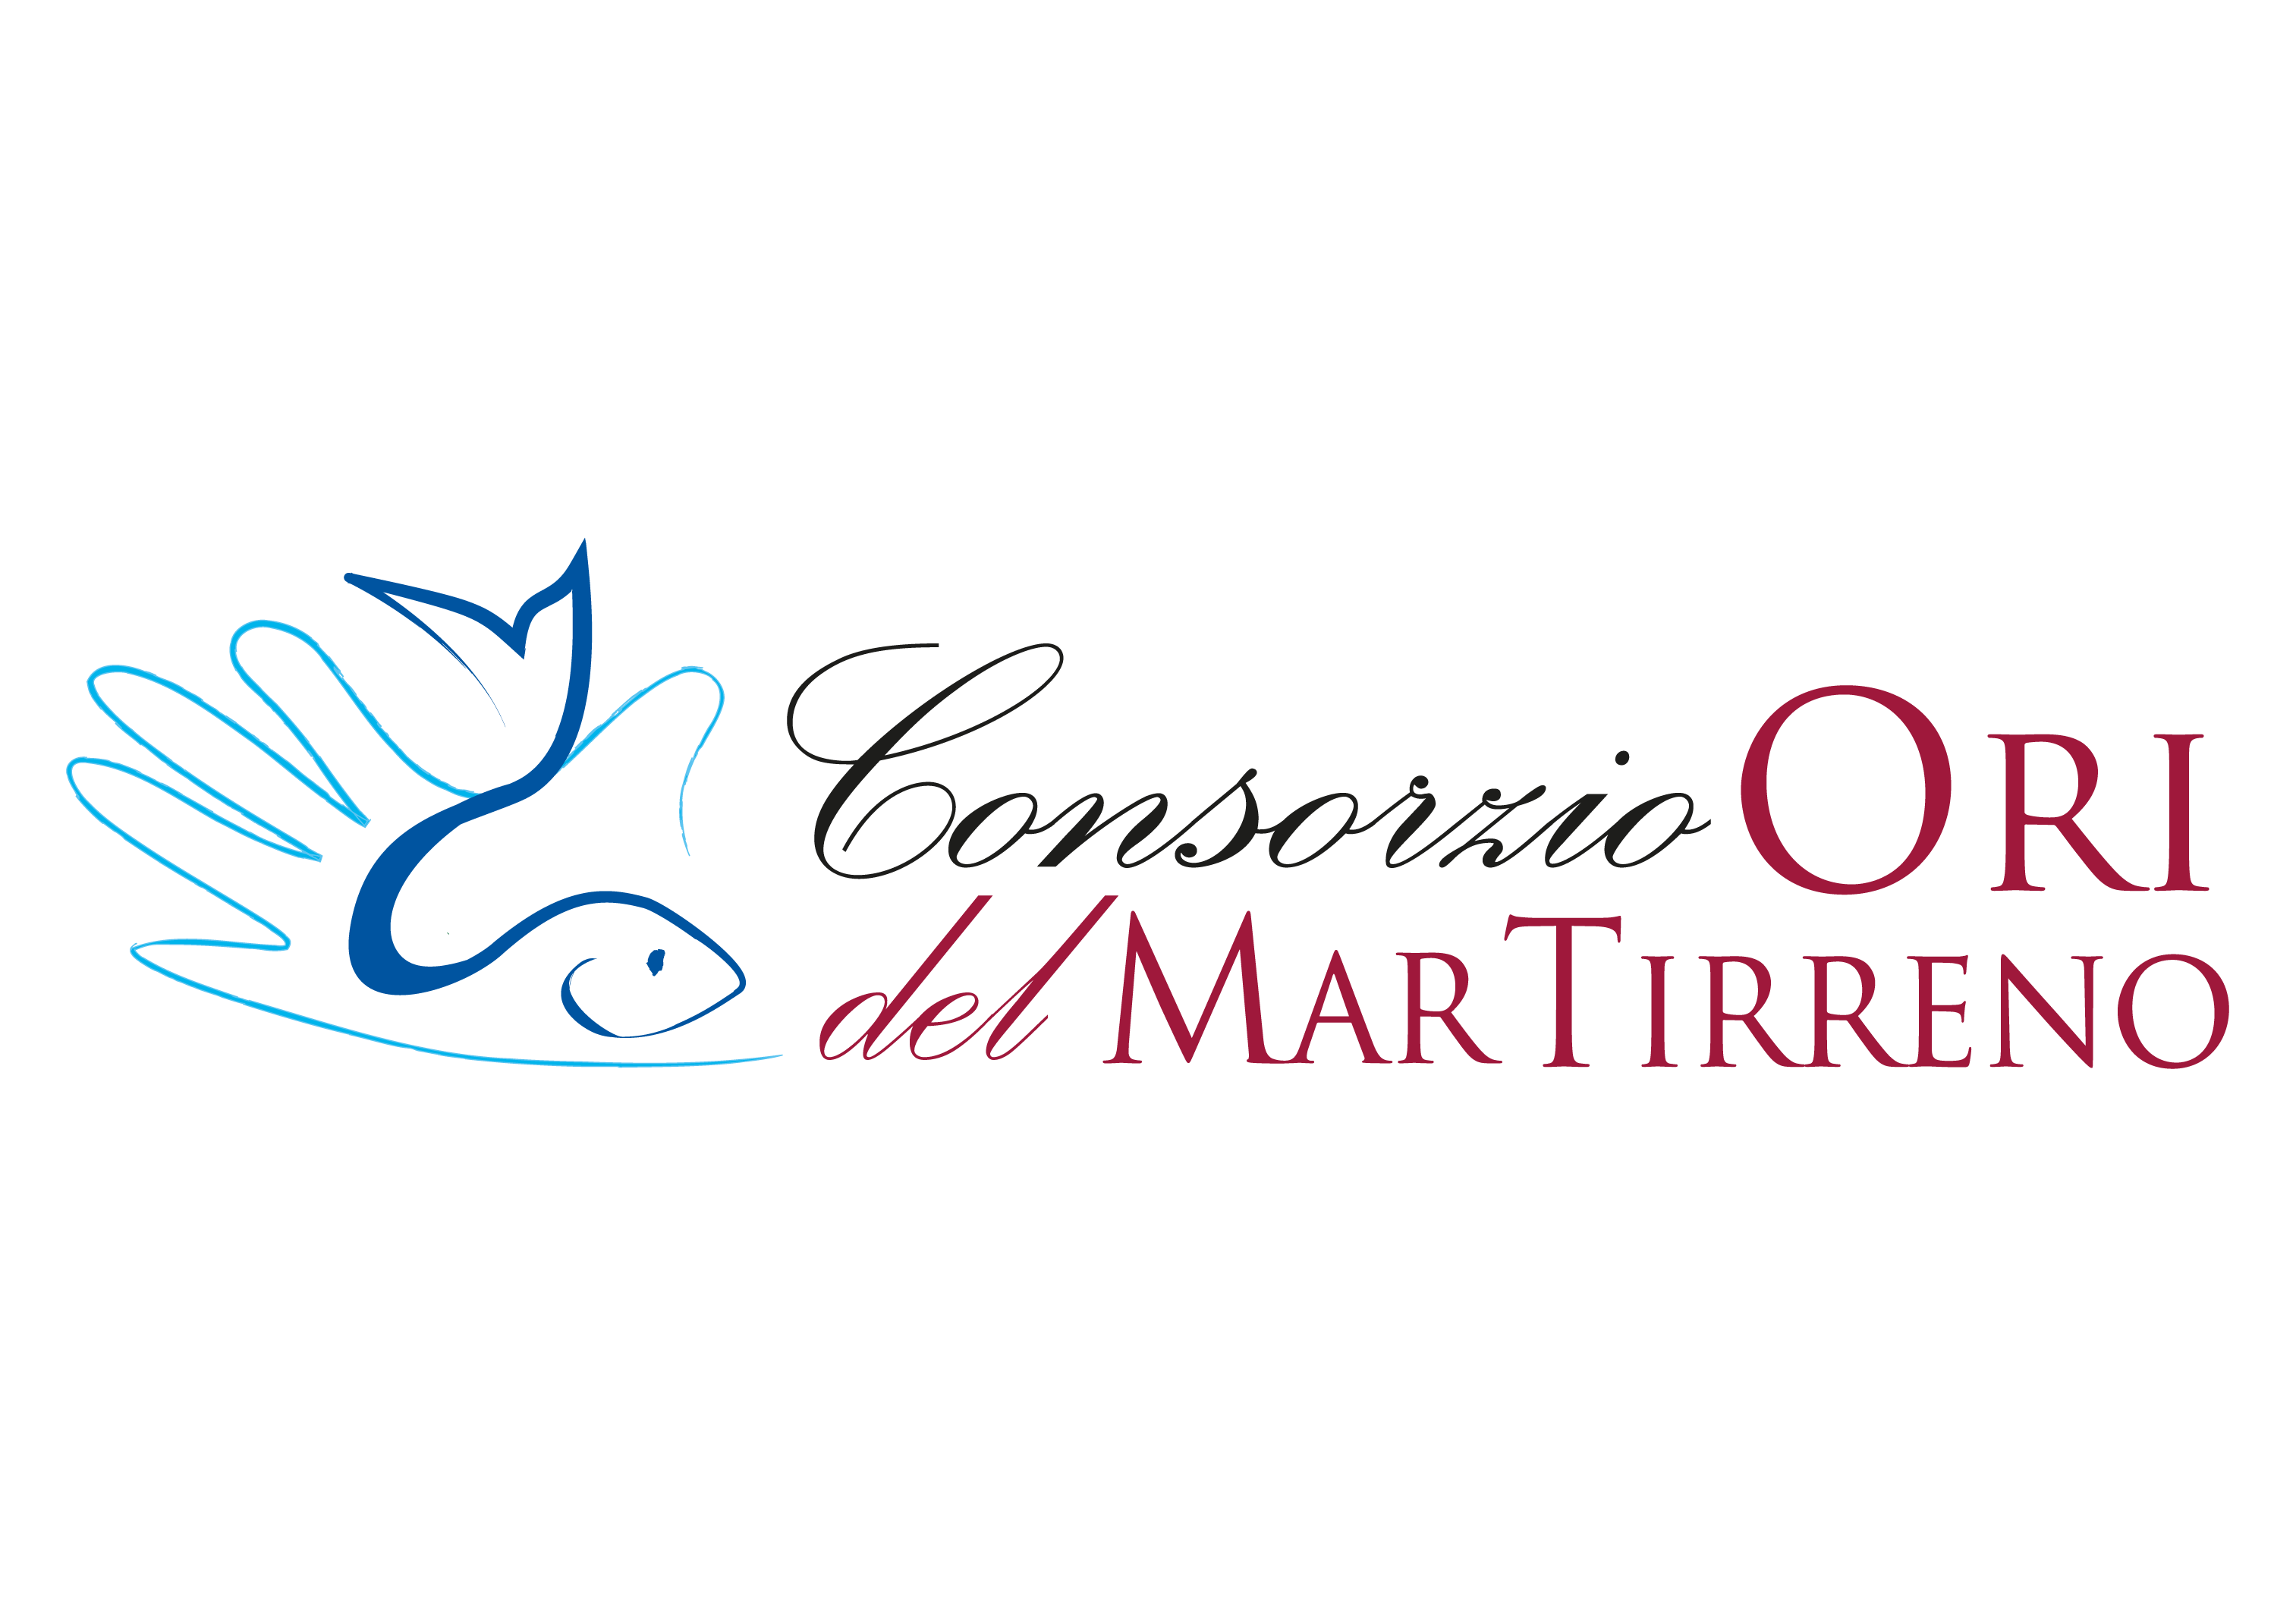 Ori-Mar-Tirreno-logo-copia (1)